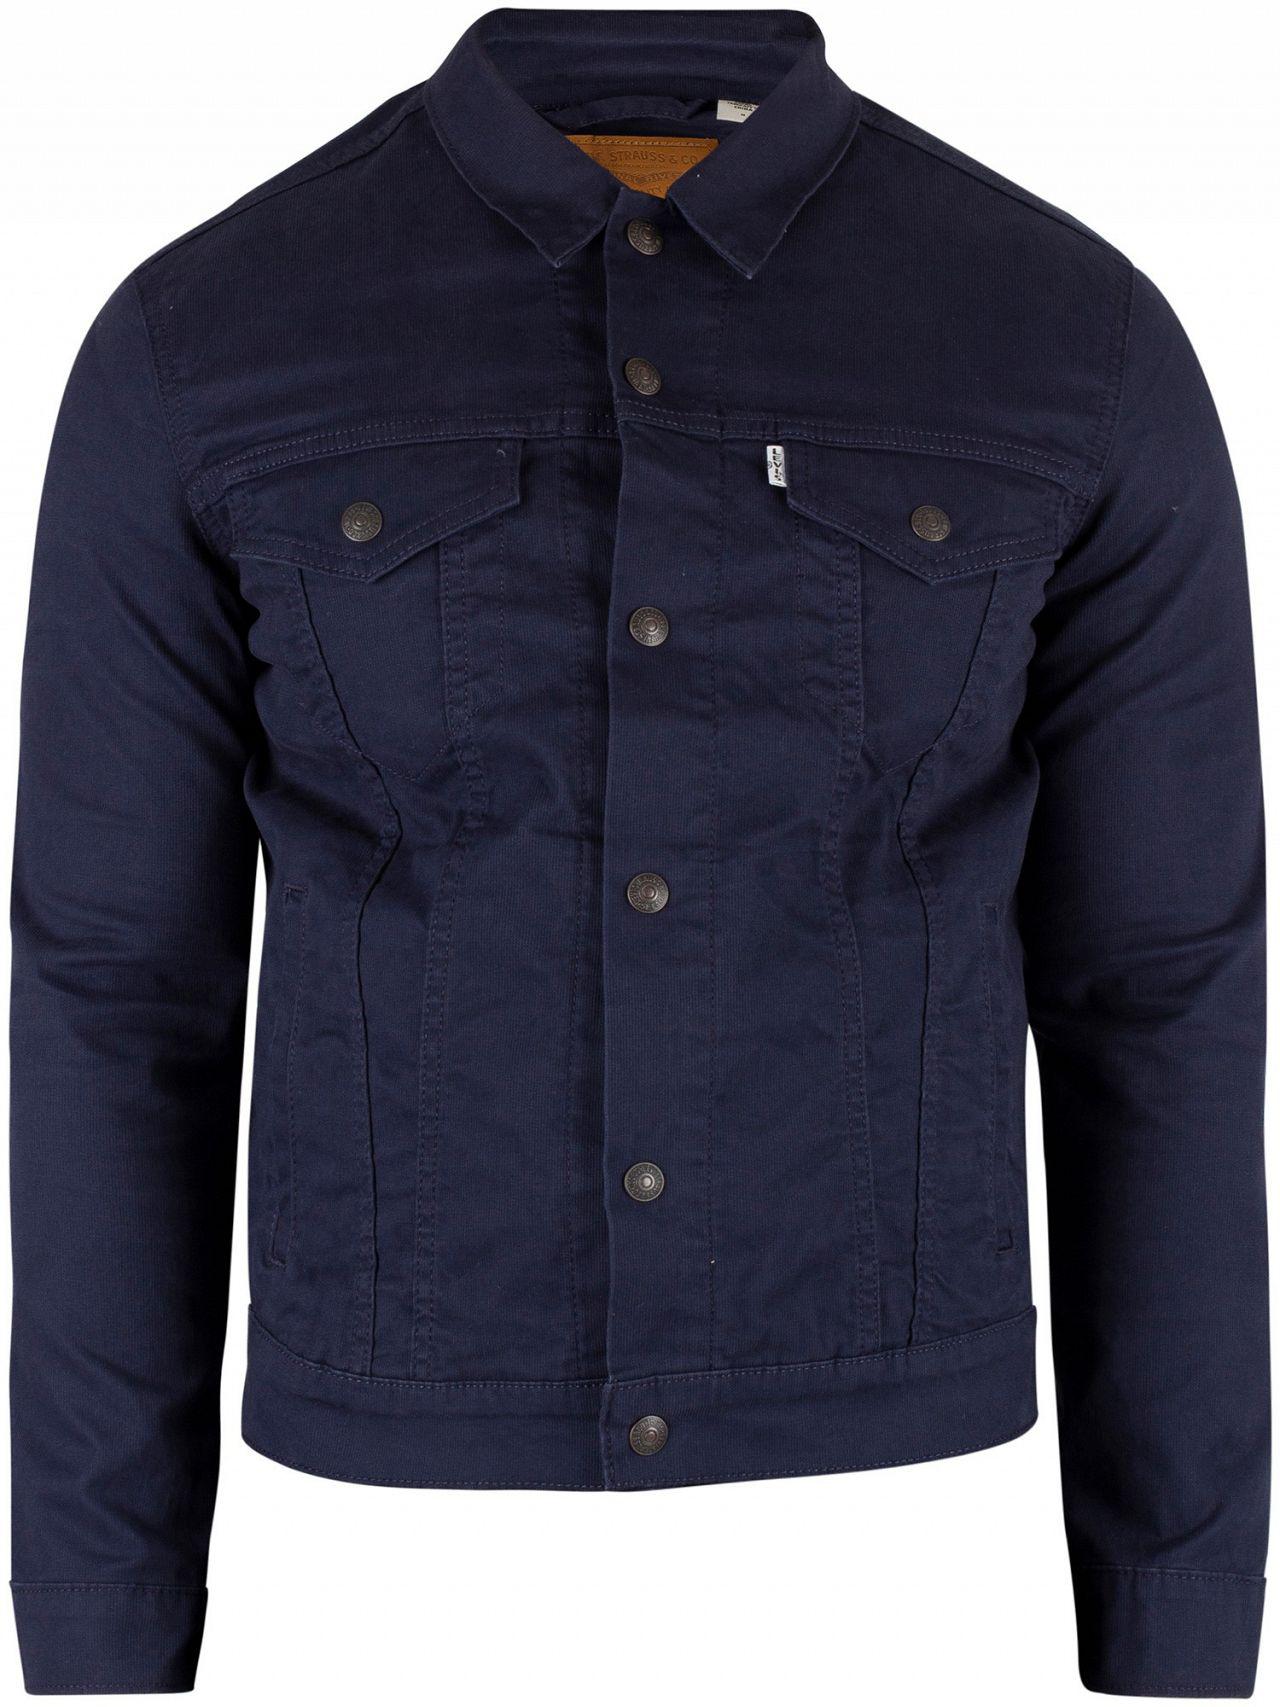 Malaise George Bernard Worden Levi's Cotton Navy Blazer The Trucker Jacket in Blue for Men - Lyst